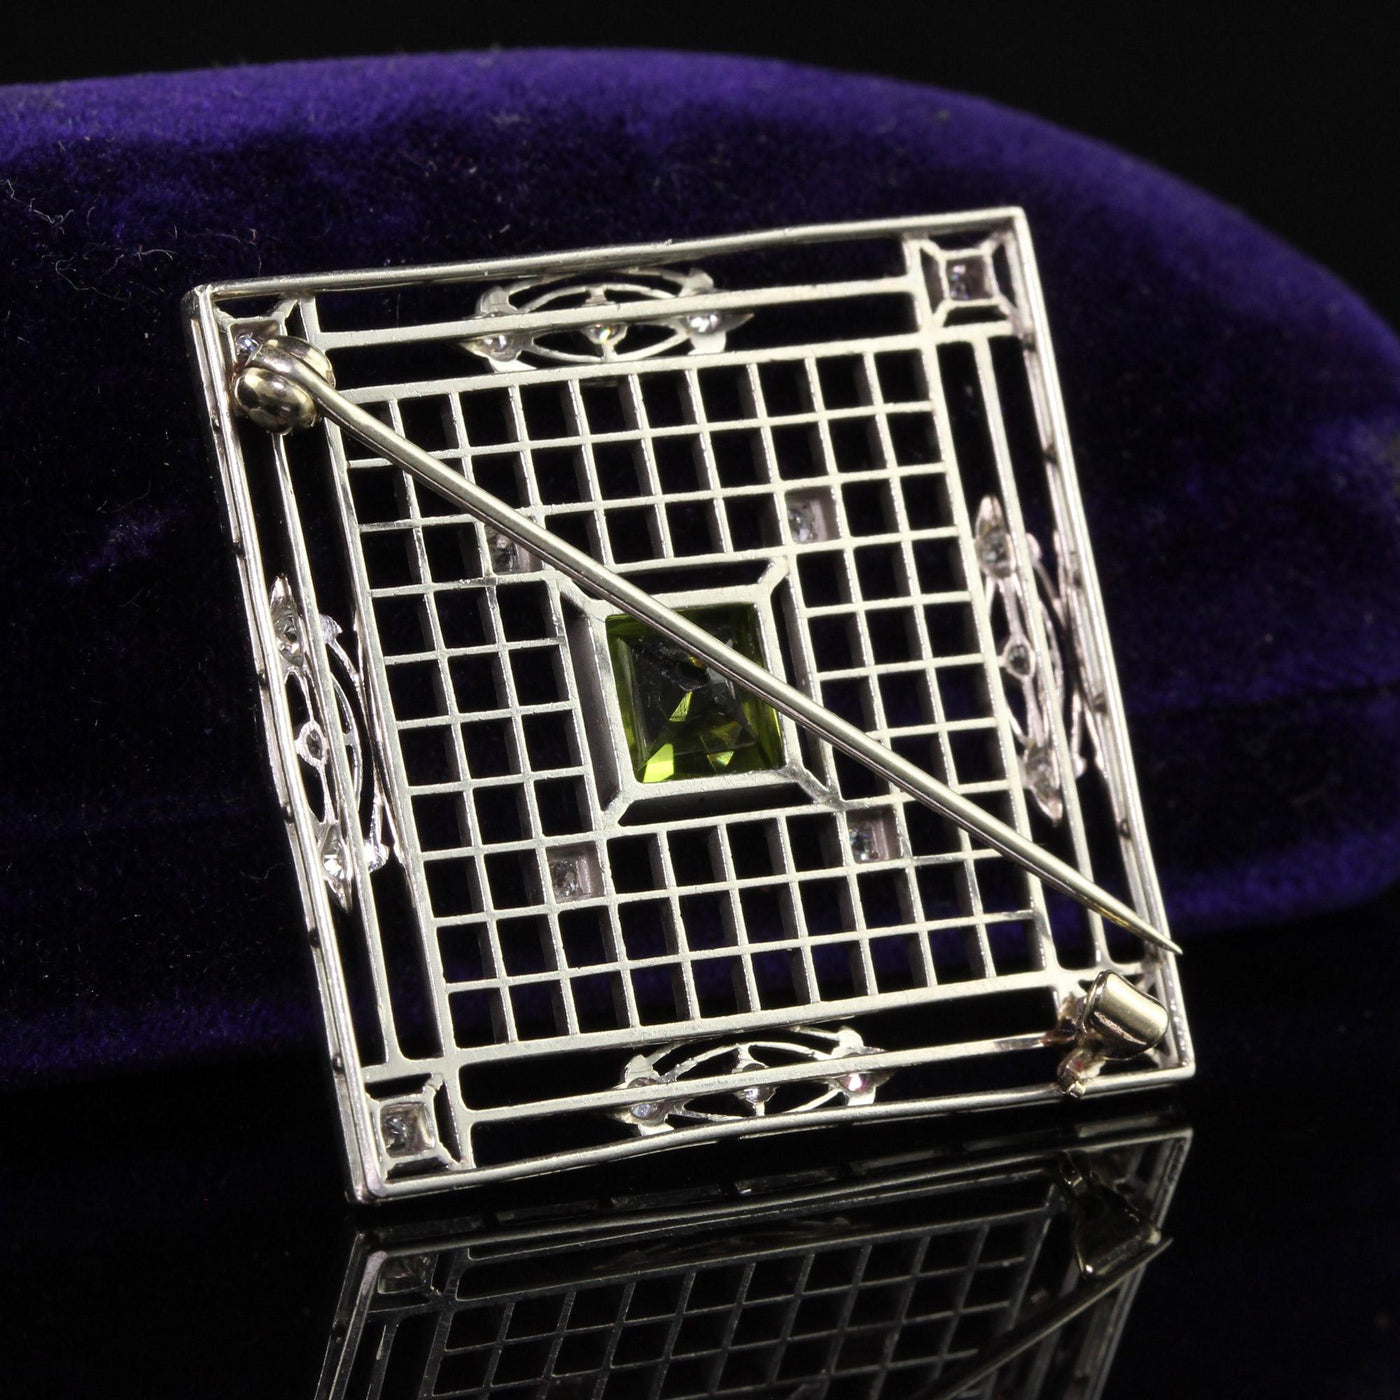 Antique Art Deco Shreve and Co Platinum French Cut Peridot Diamond Filigree Pin